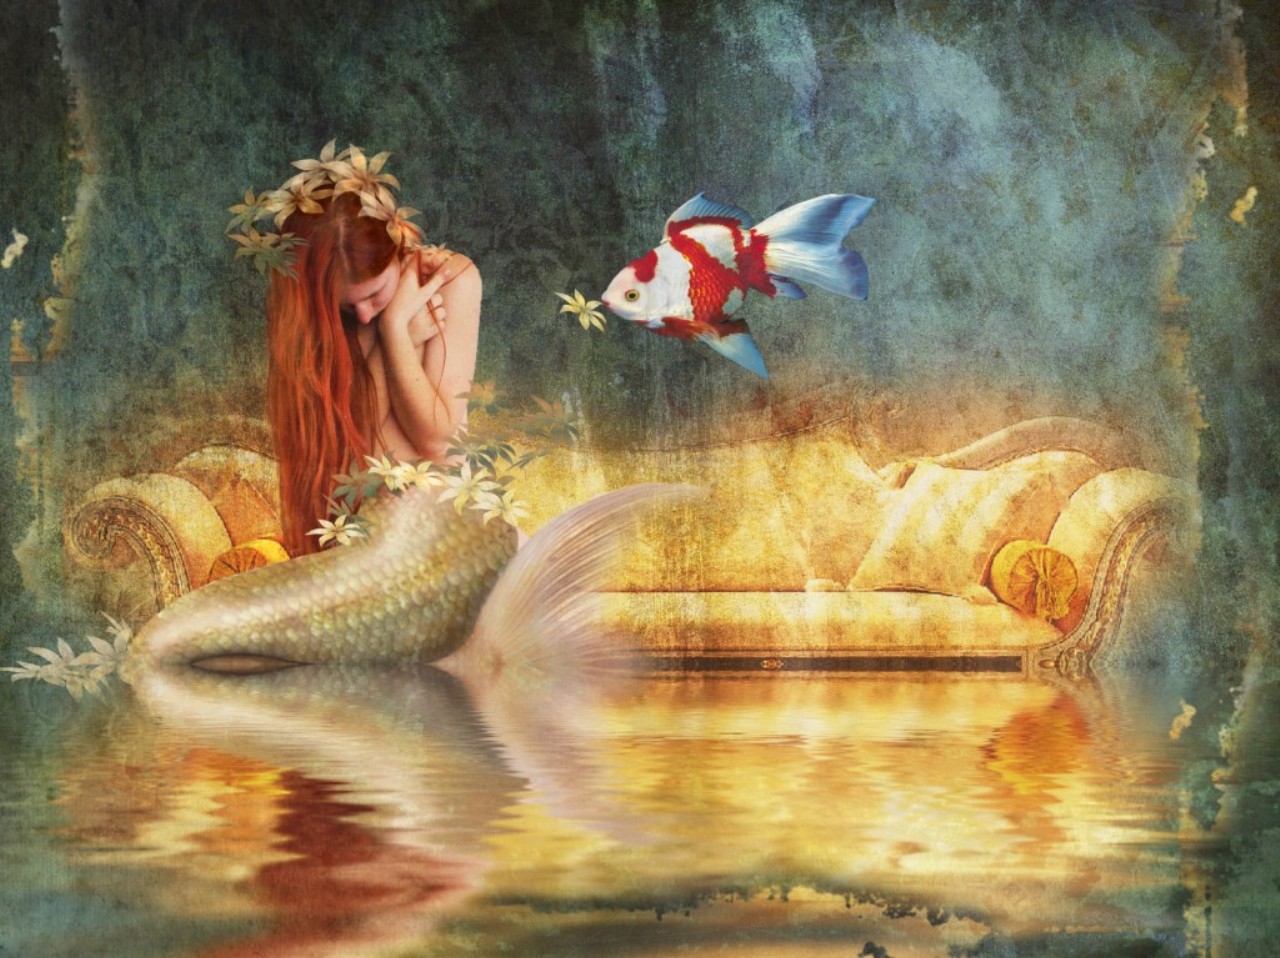 Mermaid Puter Wallpaper Desktop Background